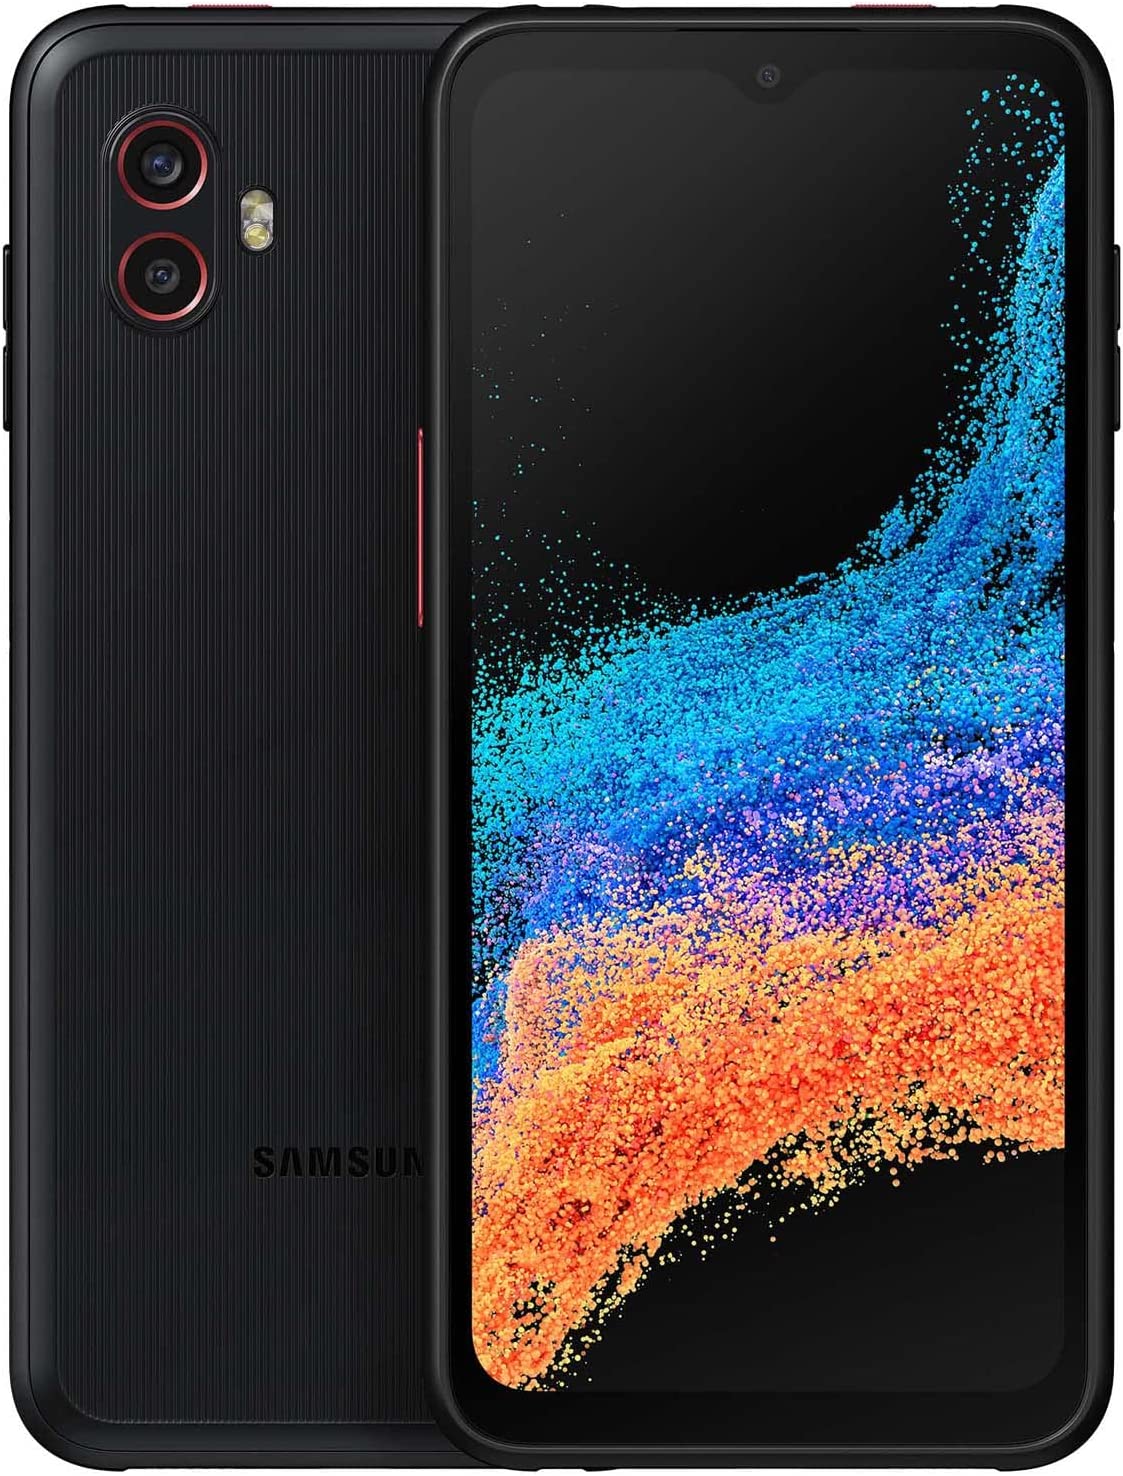 Samsung Galaxy Xcover 6 Pro Dual-SIM 128GB ROM + 6GB RAM (Only GSM No CDMA) Factory Unlocked 5G Smartphone (Black) - International Version